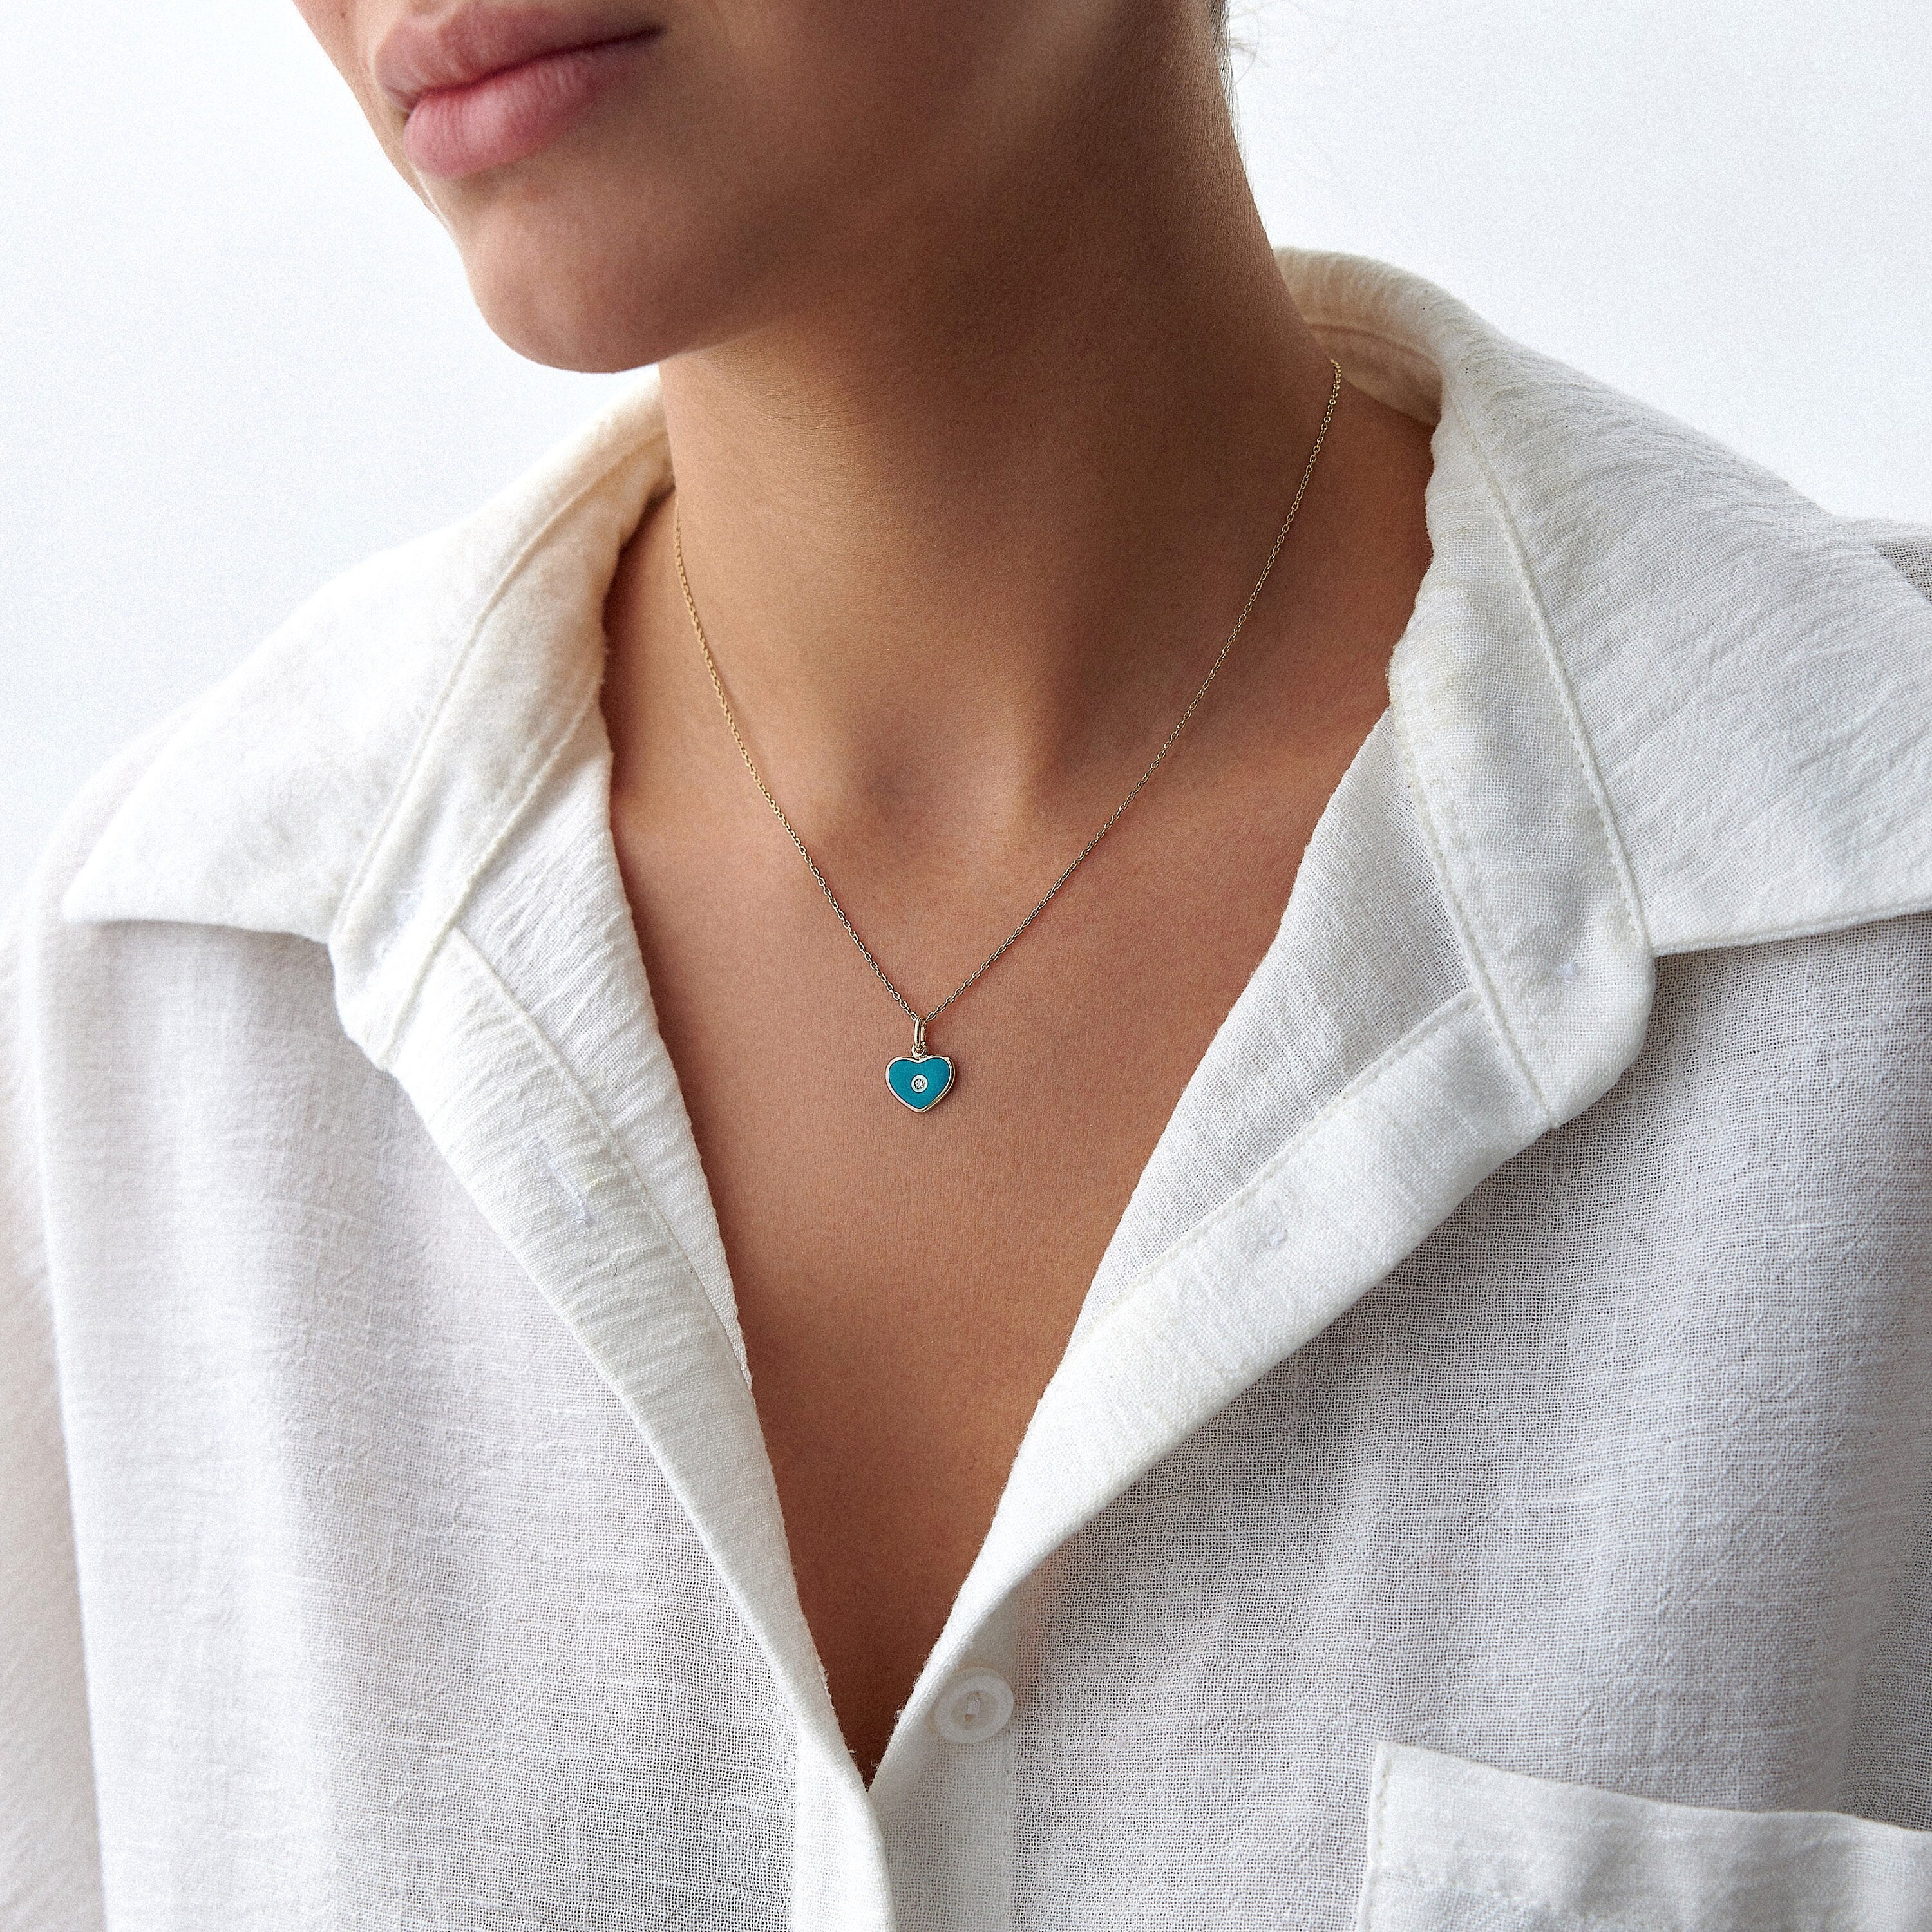 Diamond Ocean Blue Heart Pendant Necklace in 14K Gold